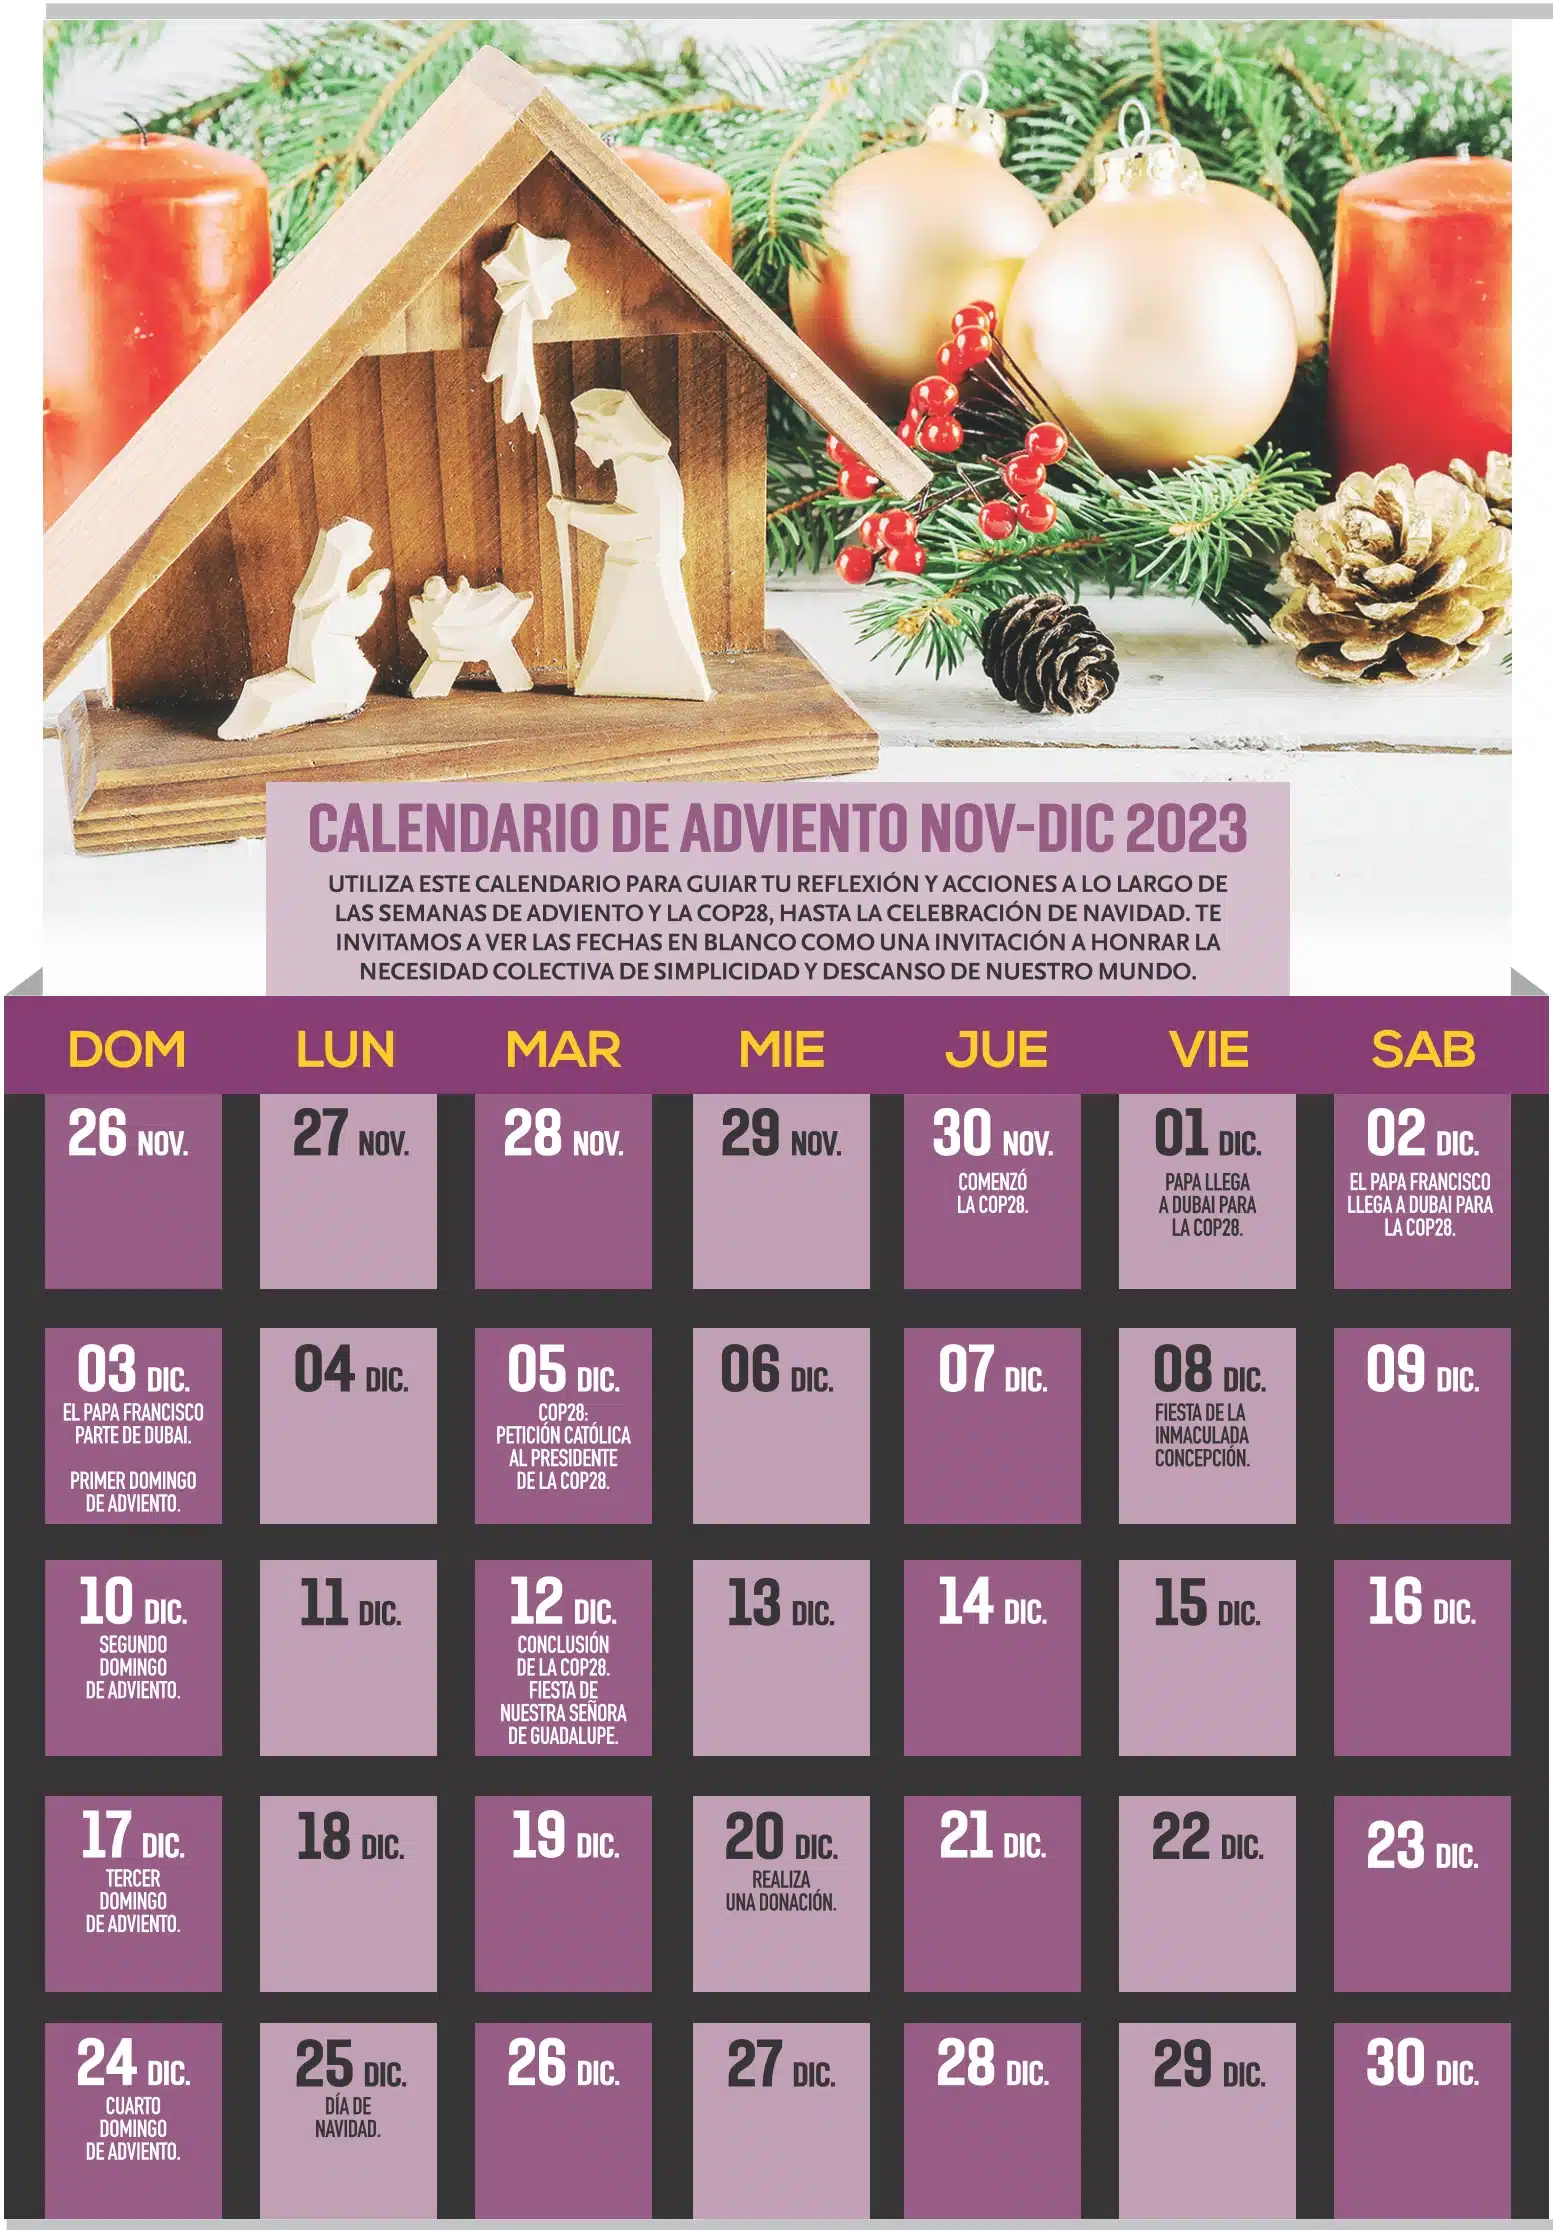 Calendario de adviento 2023 — idealista/news